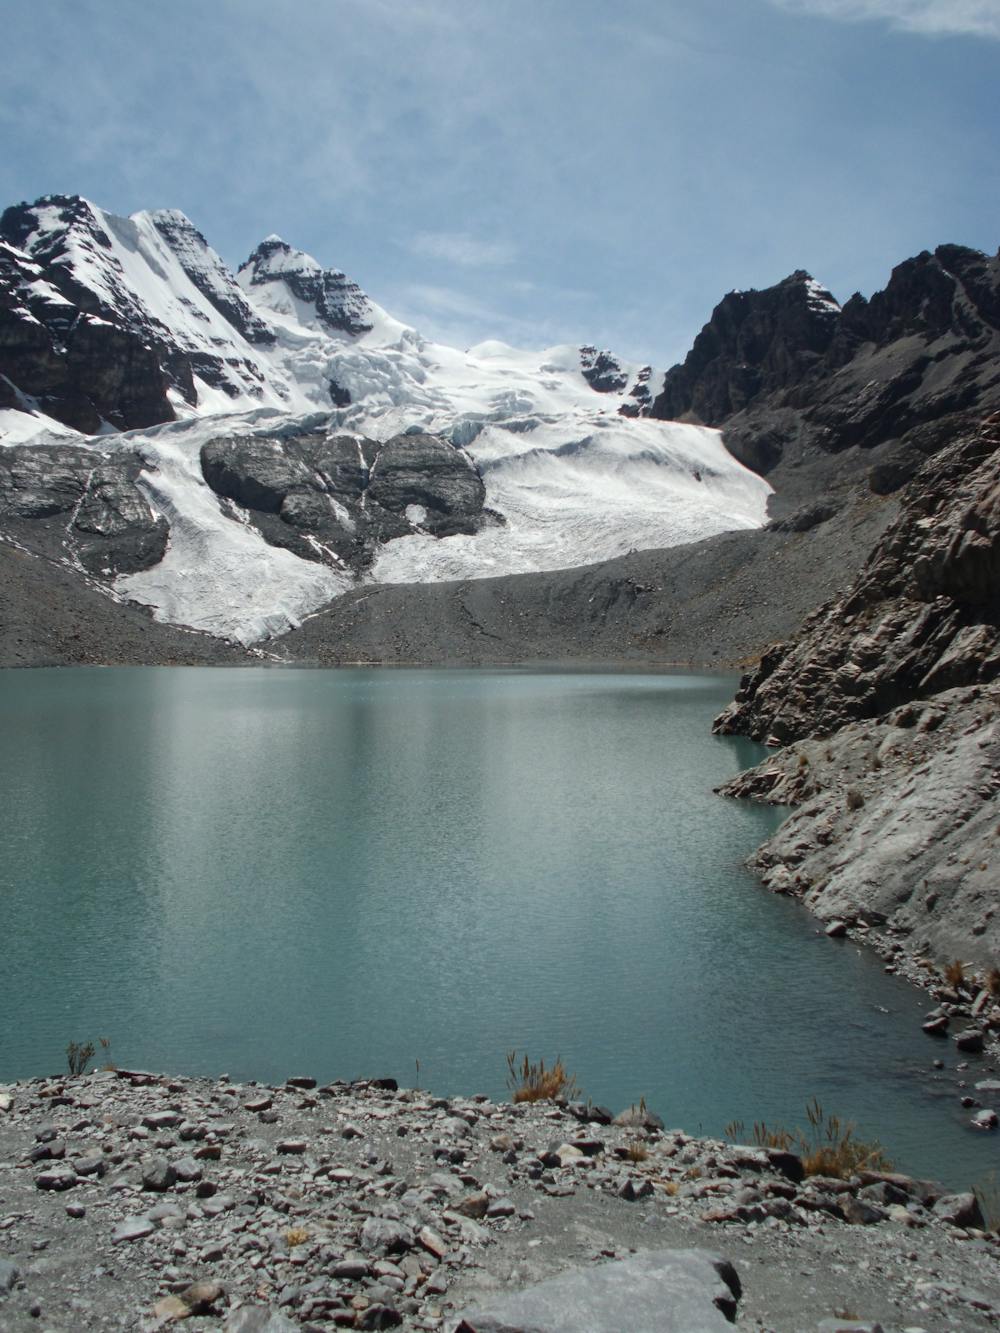 At the glacial lake beneath the Condoriri mountains